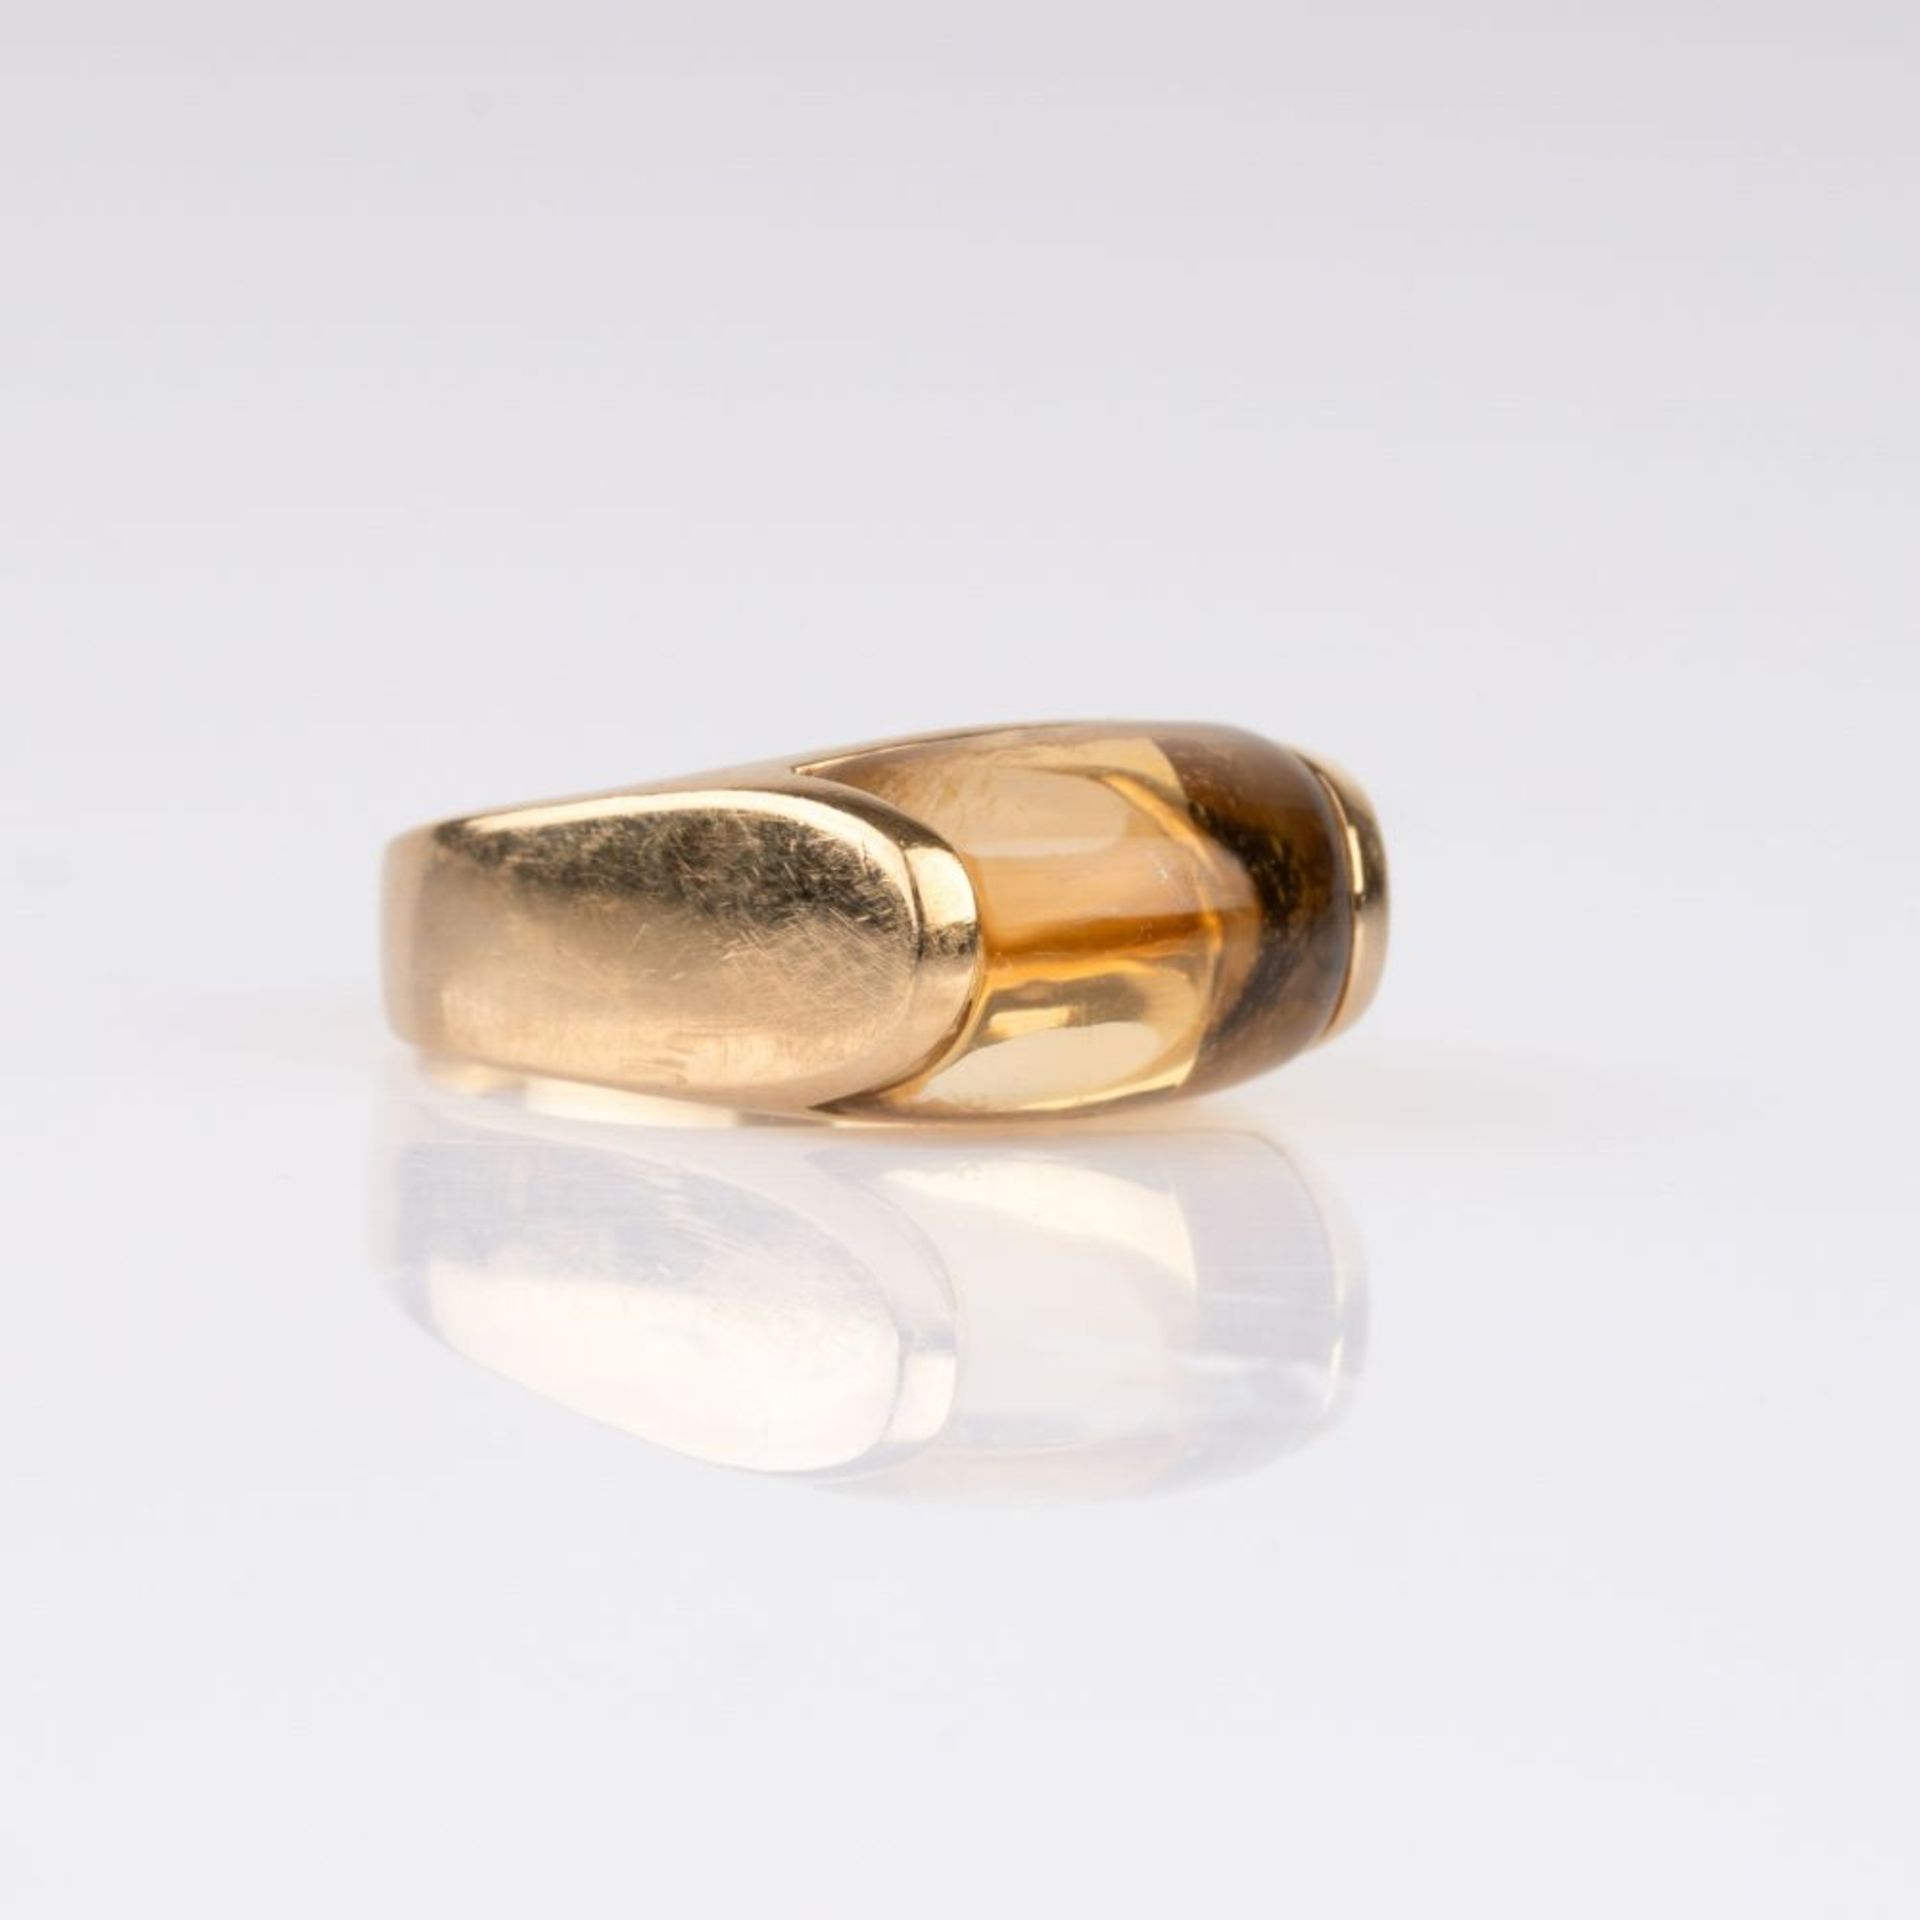 Bulgari. Gold-Ring mit Citrin 'Tronchetto'. - Bild 2 aus 2